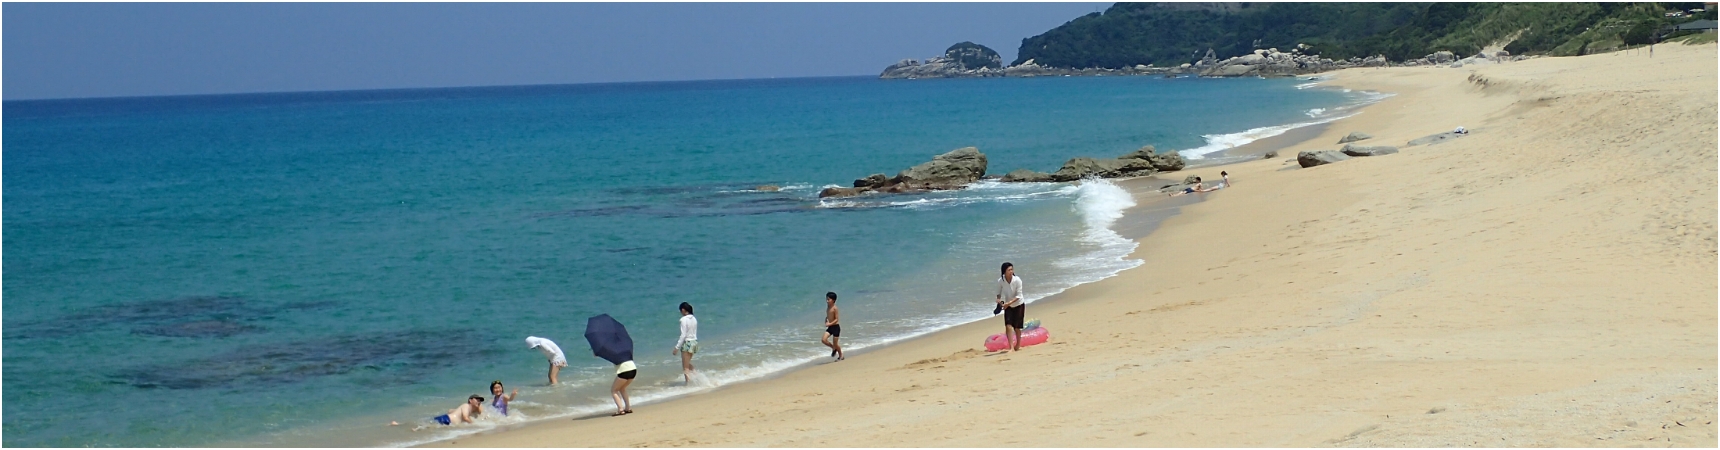 Nagata Beach with its beautiful blue sea and sandy beach. Visitors are enjoying a swim.